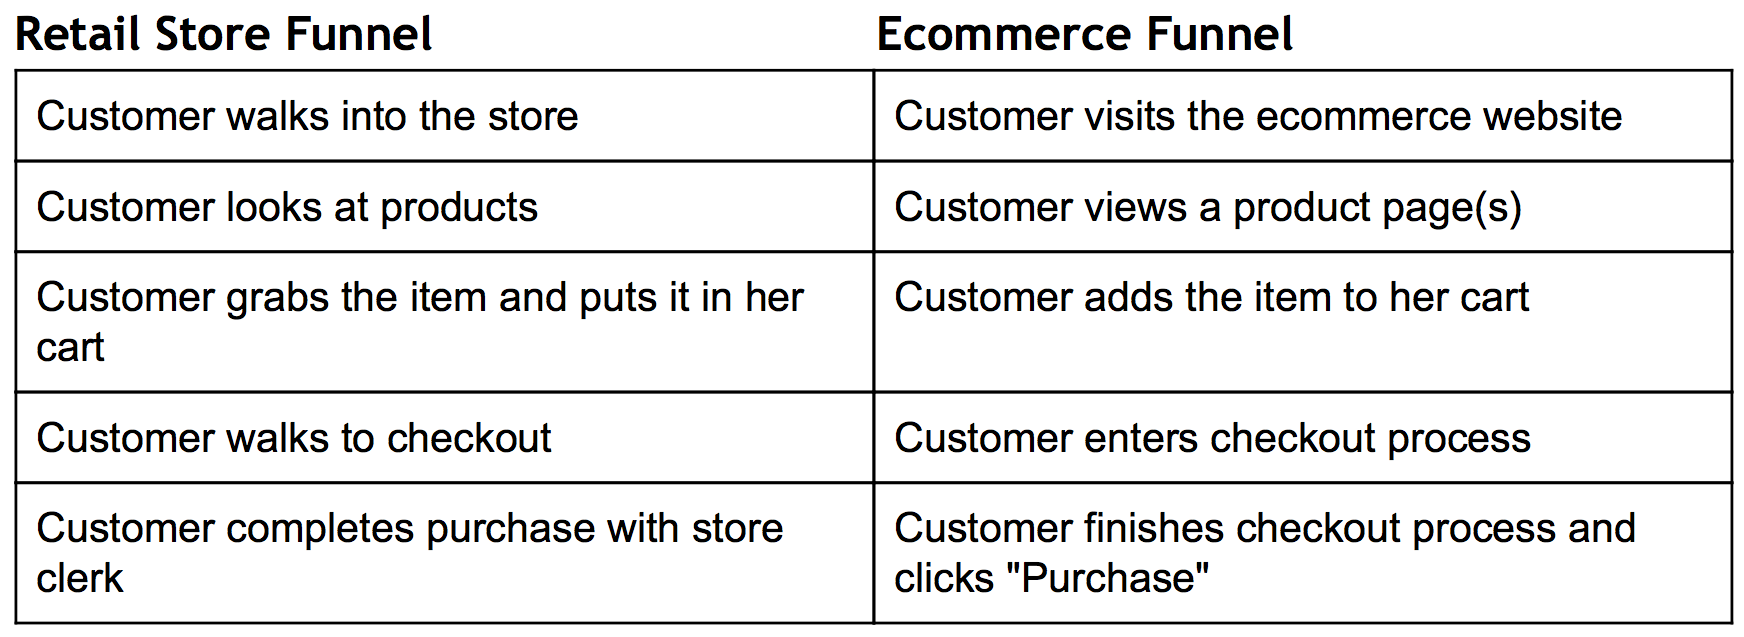 marketing funnel comparison-retail-store-ecommerce